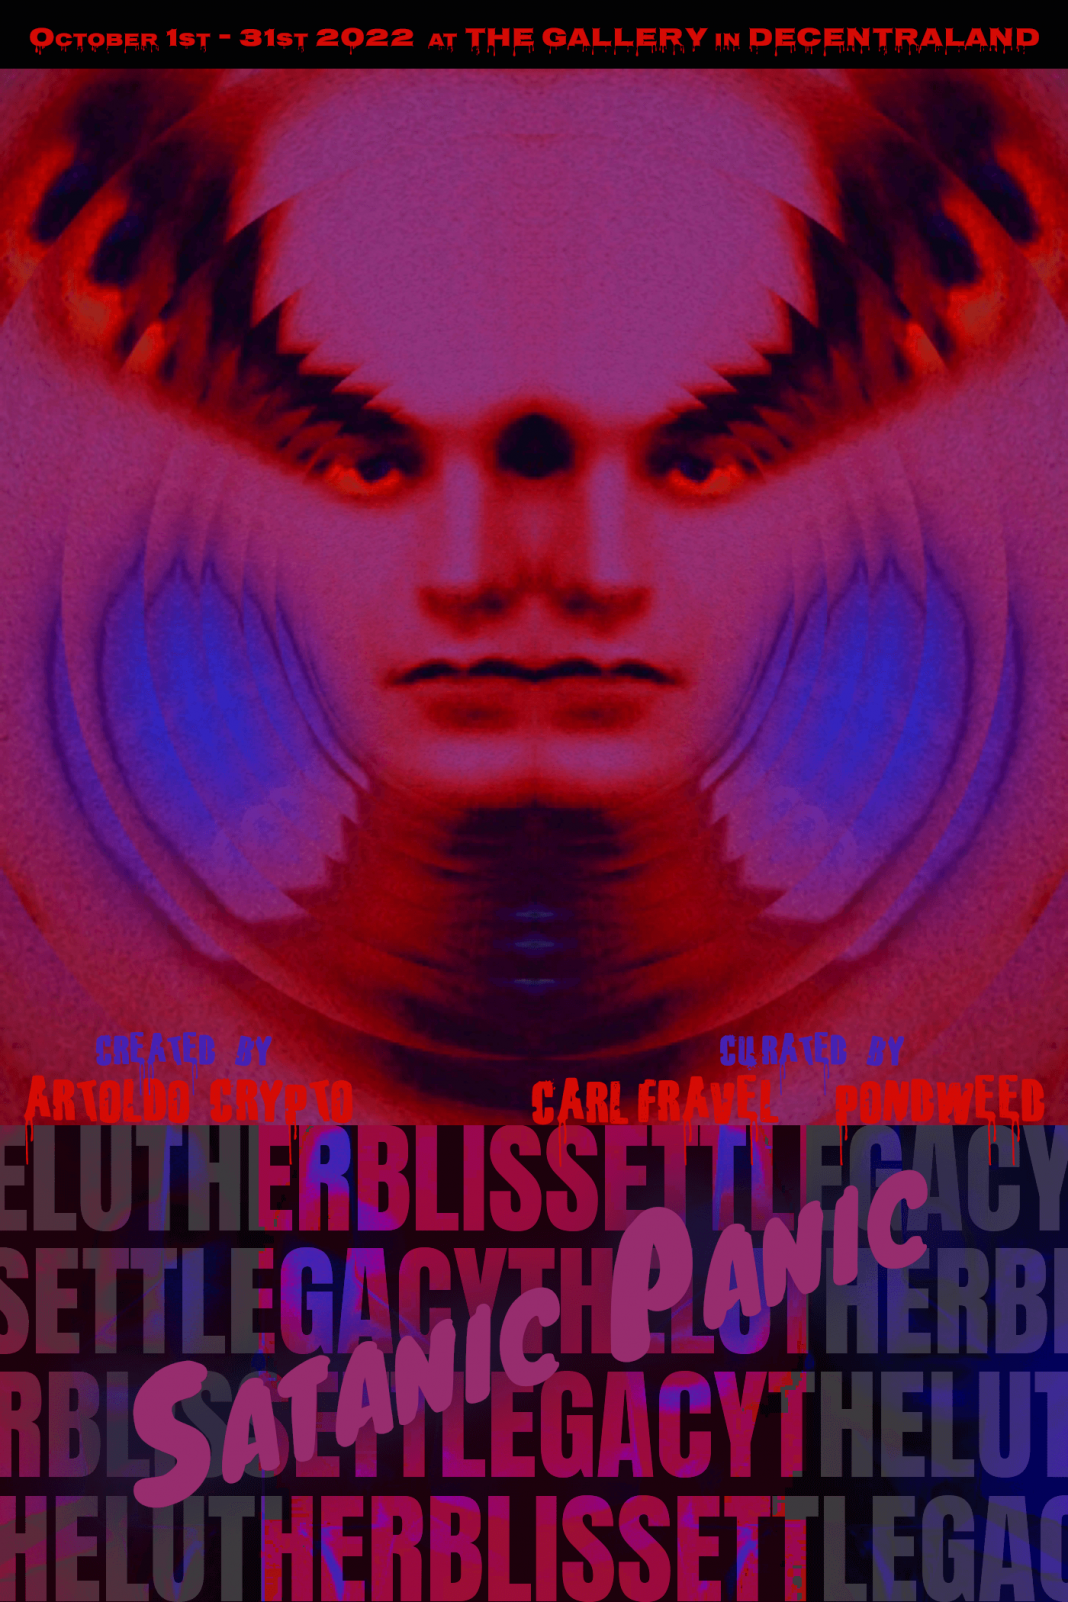 Satanic Panic – The Luther Blissett Legacyhttps://www.exibart.com/repository/media/formidable/11/img/67f/locandina-1068x1602.png